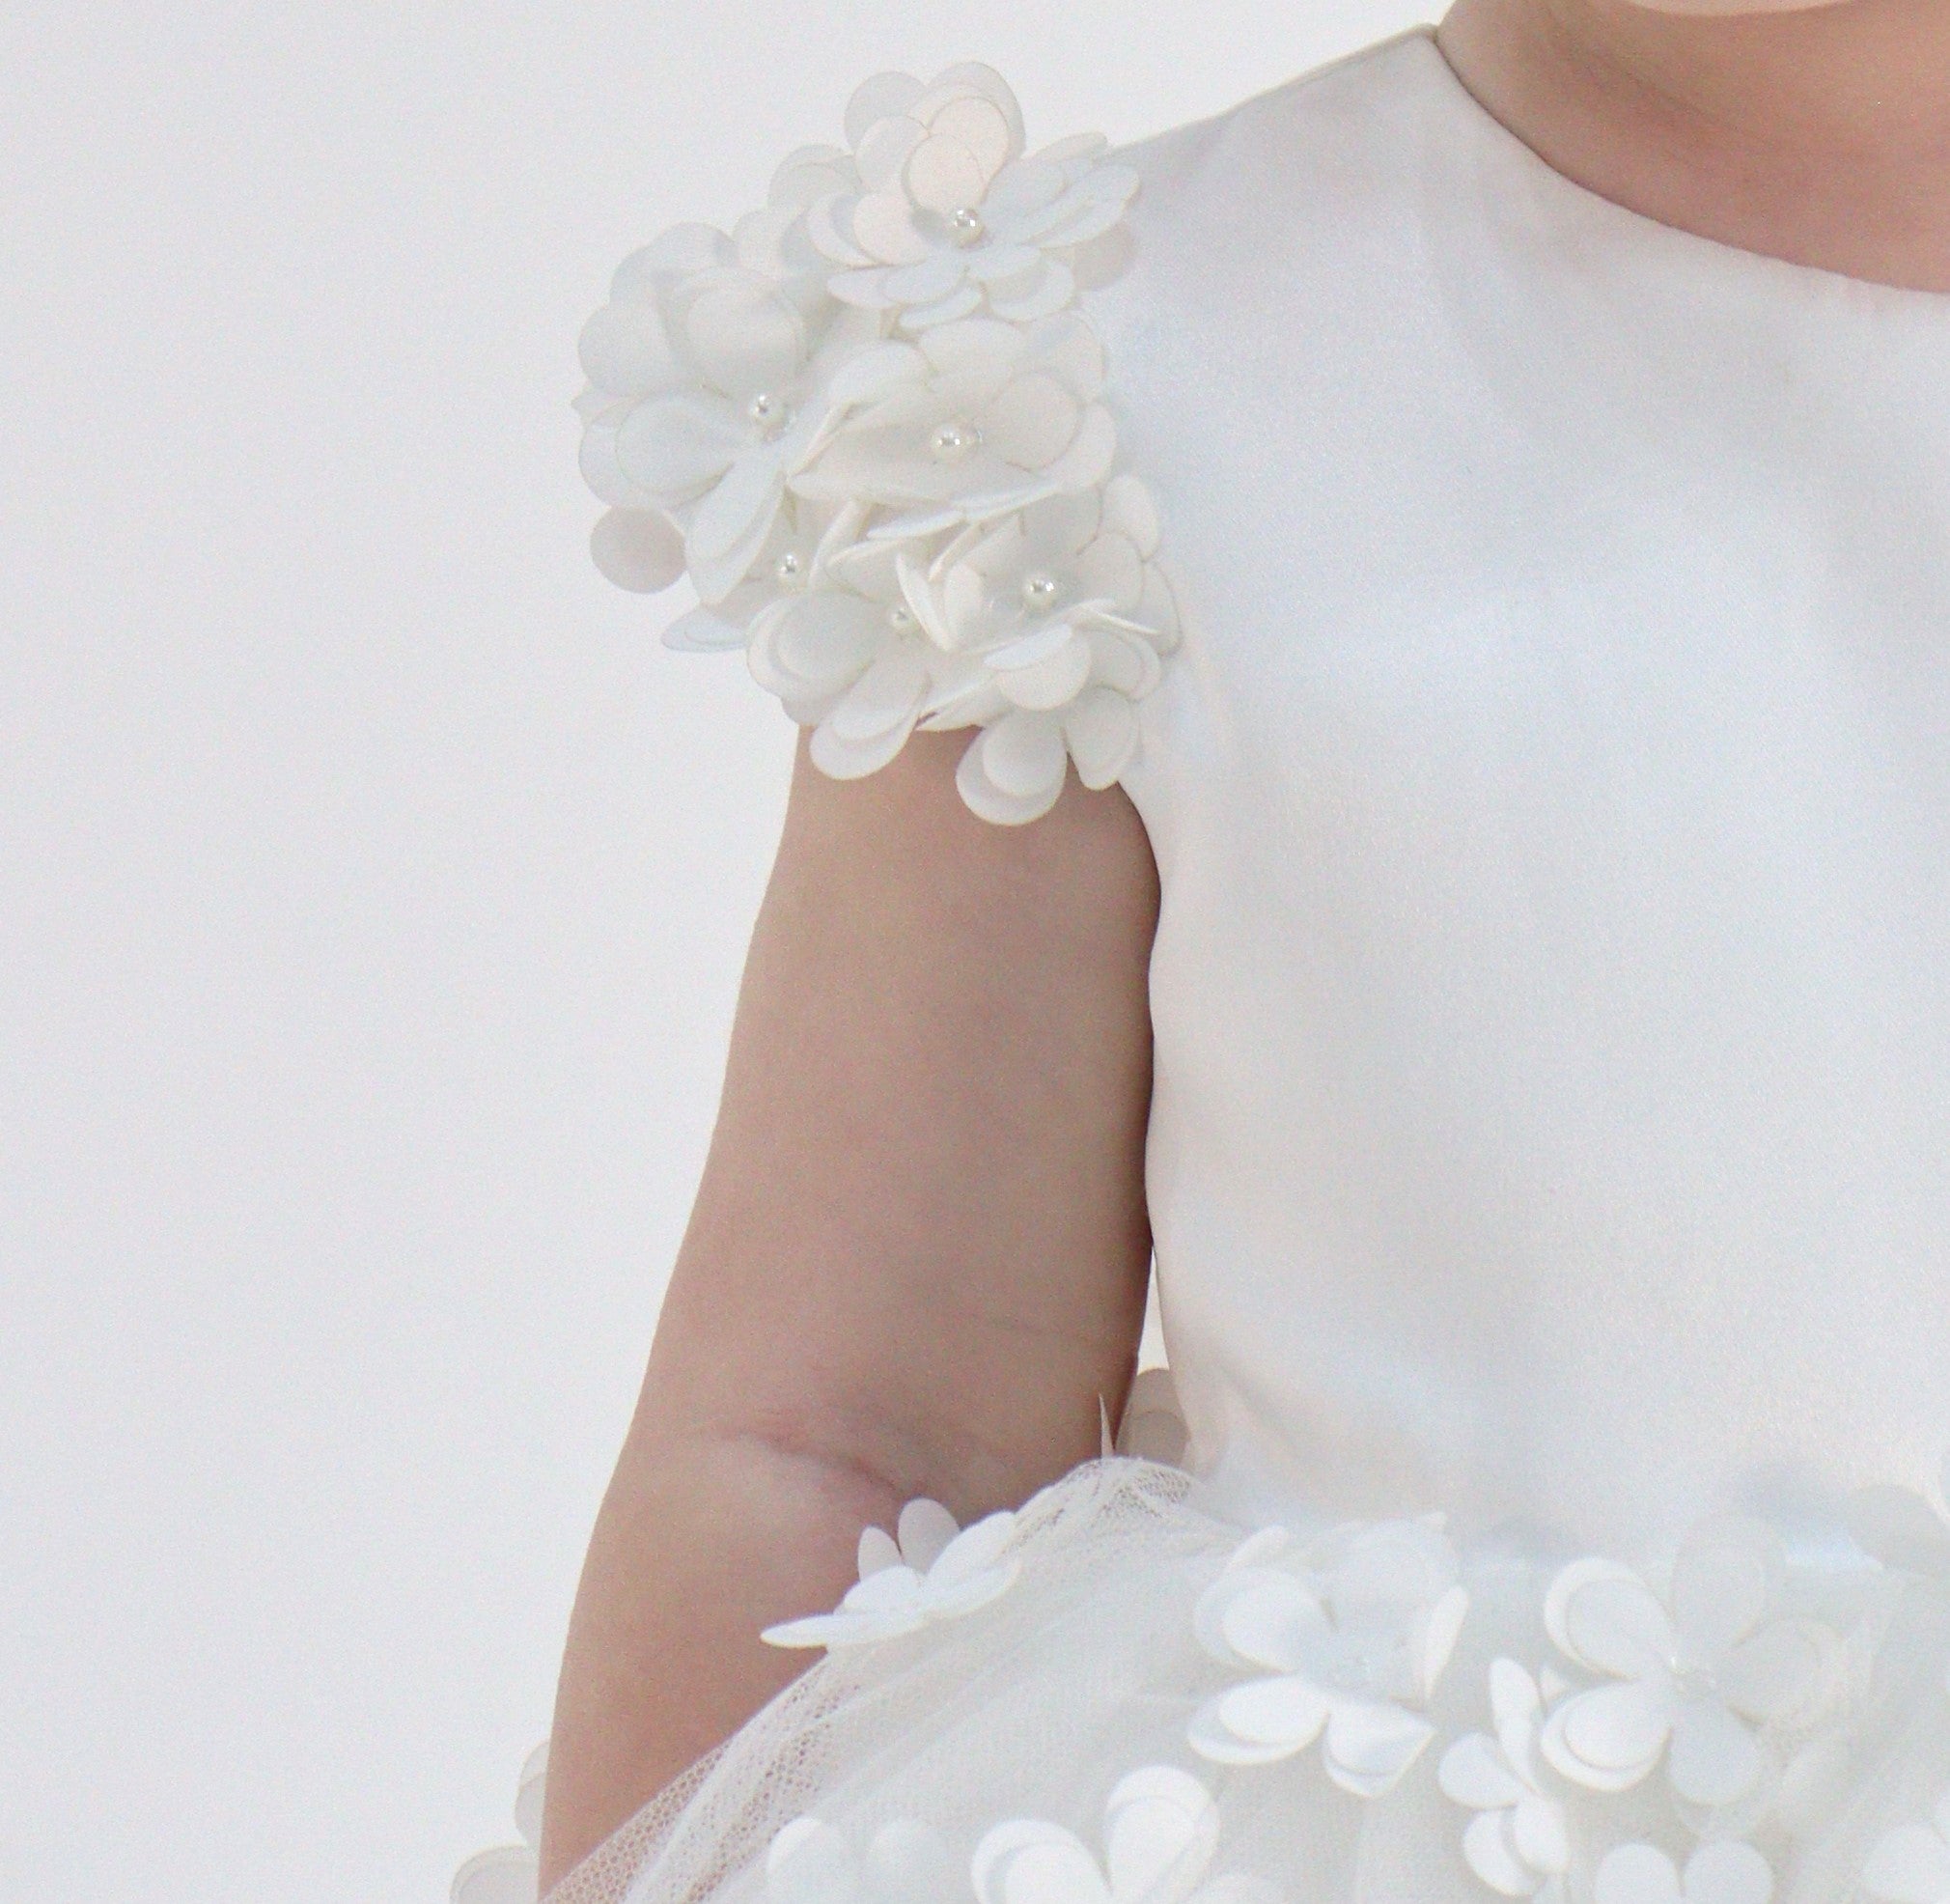 Amarah White Dress - First Birthday Dress